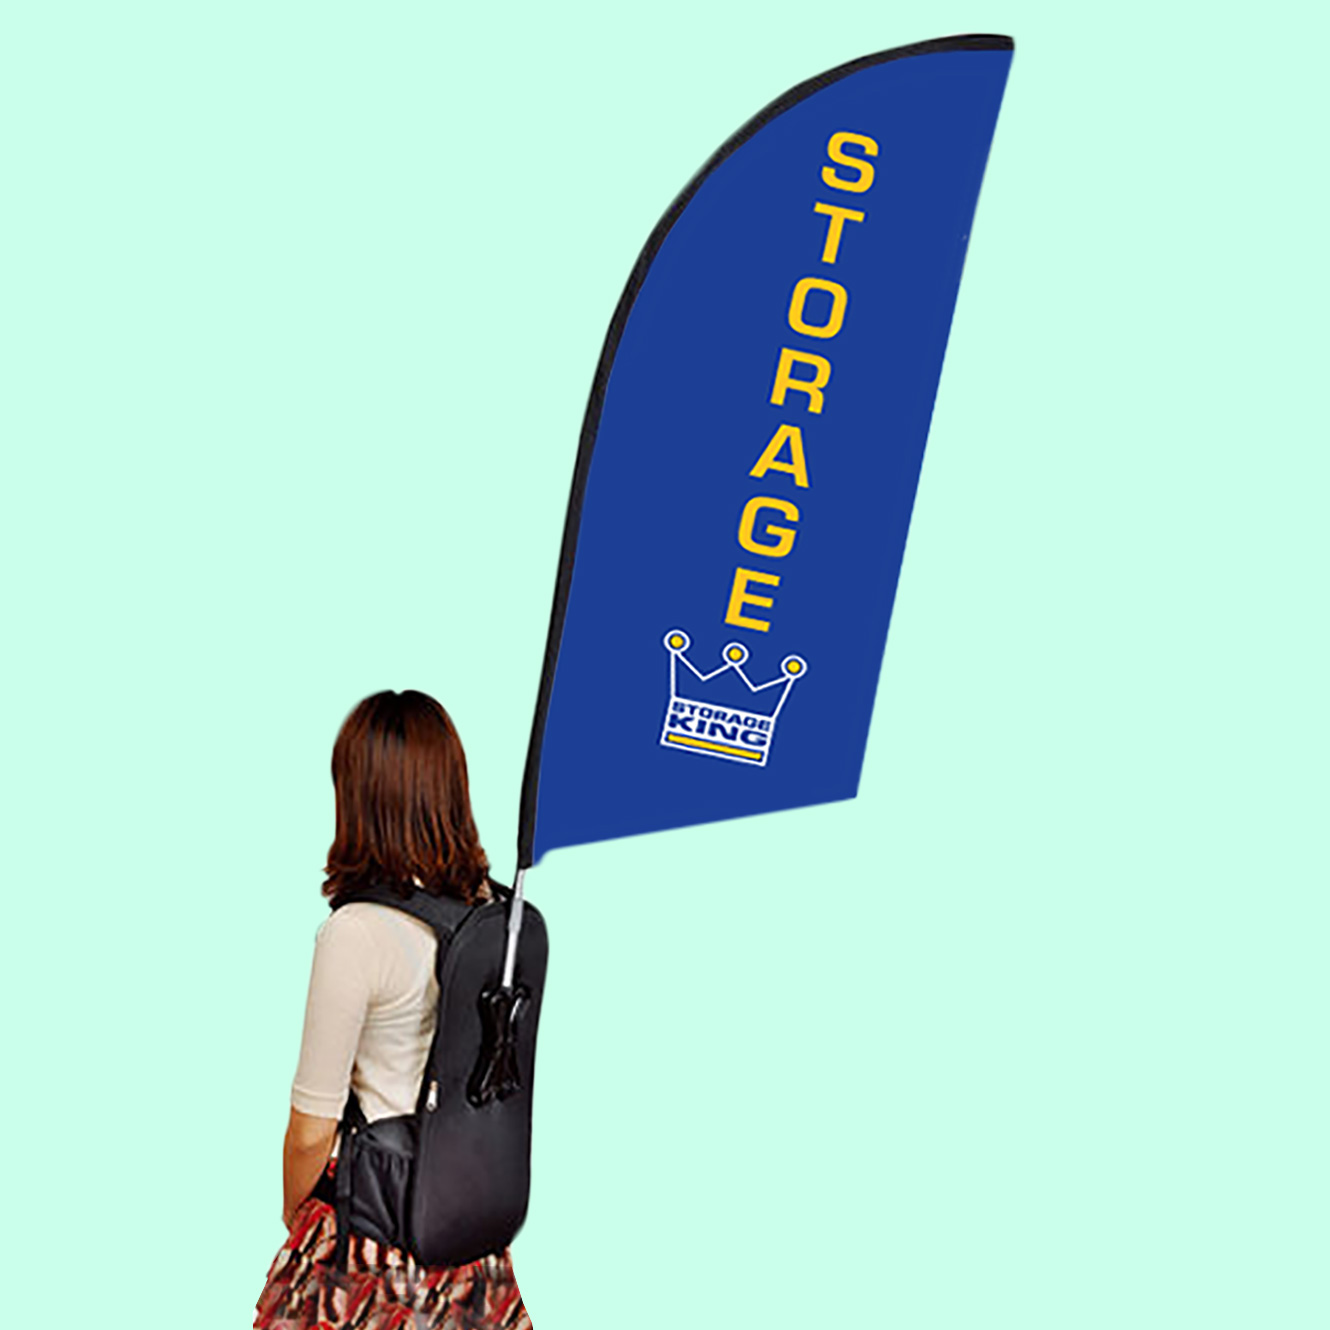 https://bigbanner.com.au/wp-content/uploads/2020/01/T-feather-backpack-flag-banner-1.jpg